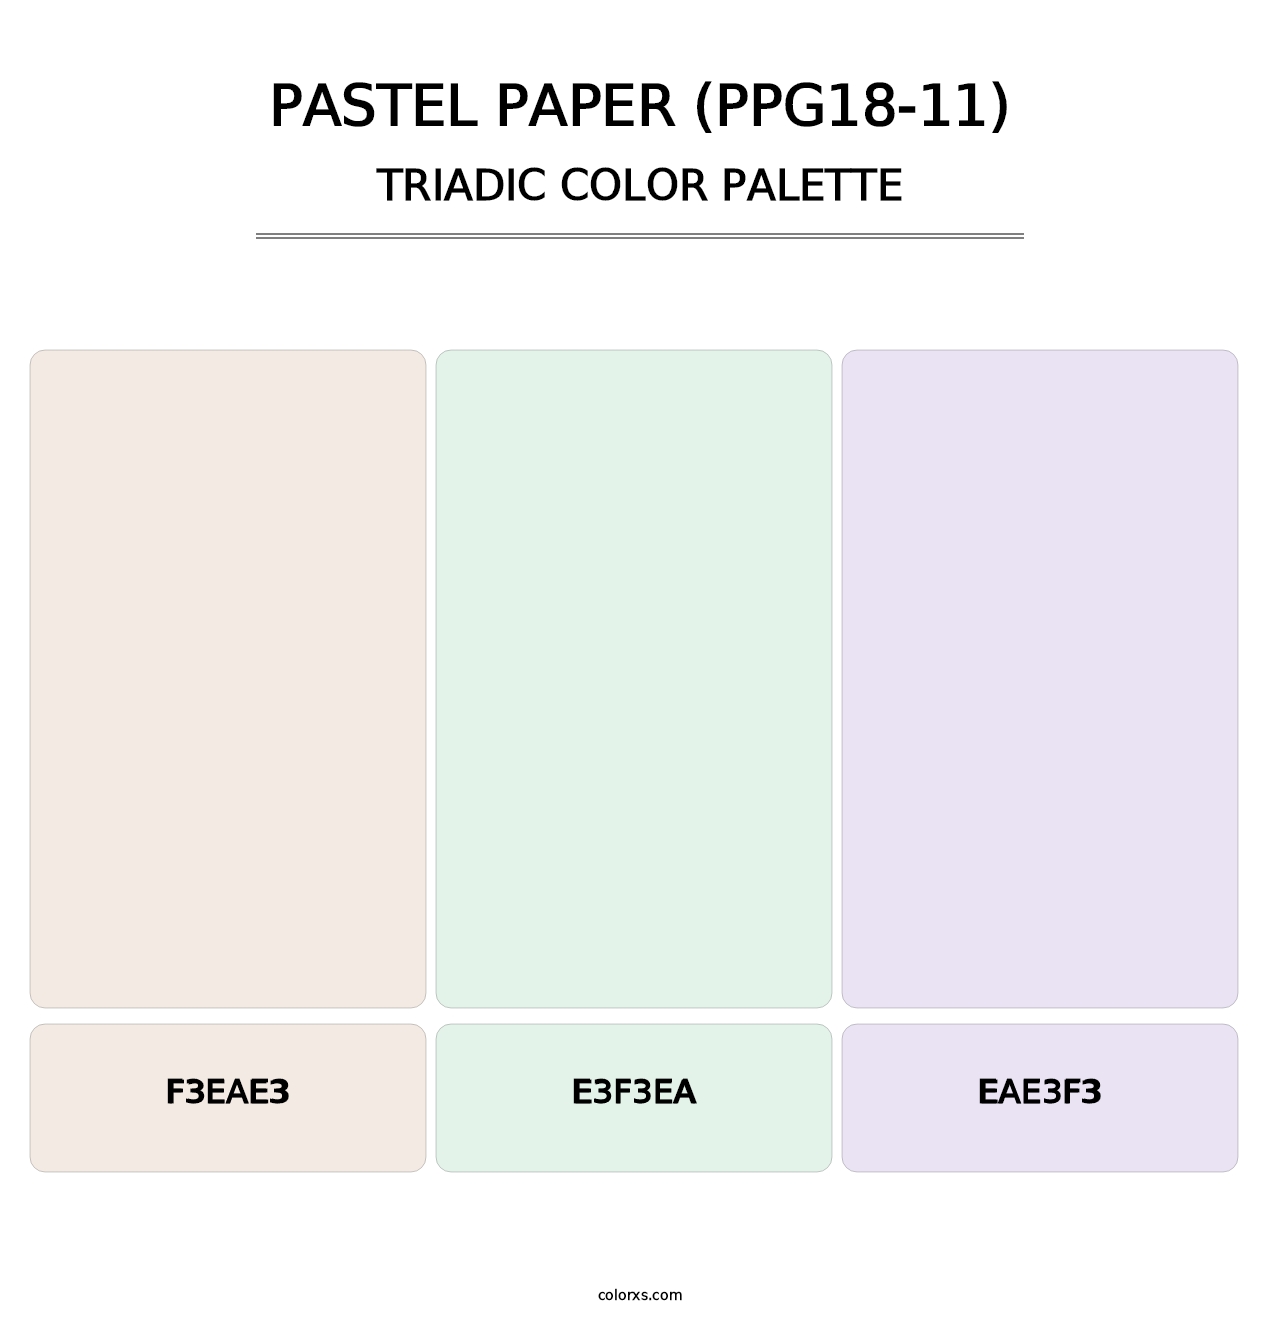 Pastel Paper (PPG18-11) - Triadic Color Palette